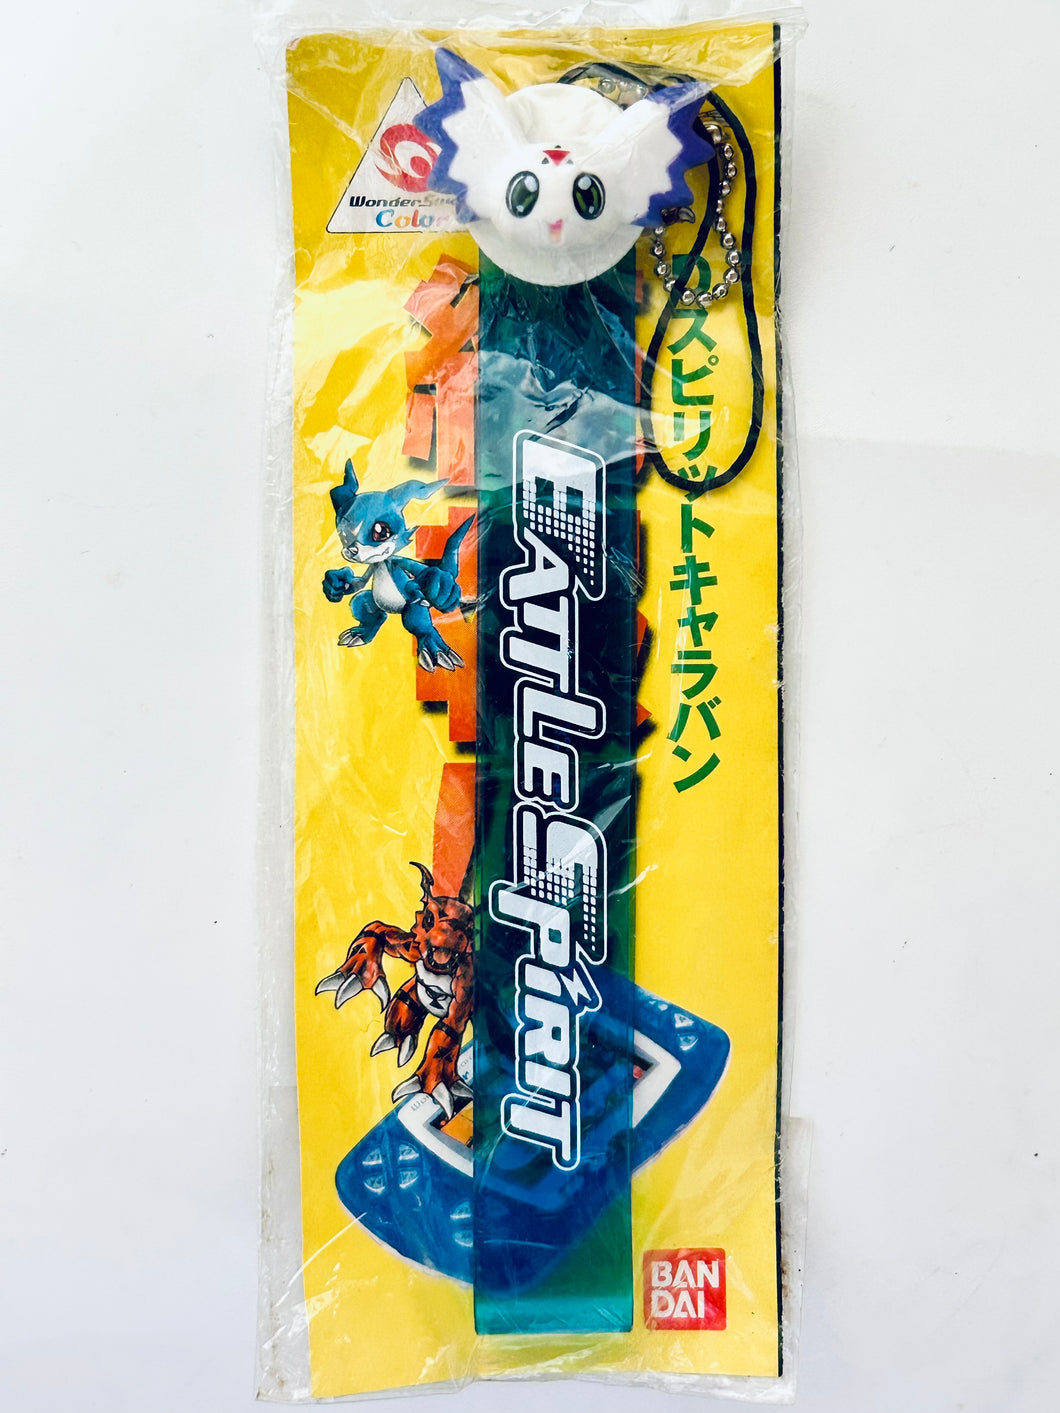 Digimon: Battle Spirits - Culumon - Strap - Wonderswan Color - Challenge! D Spirit Caravan